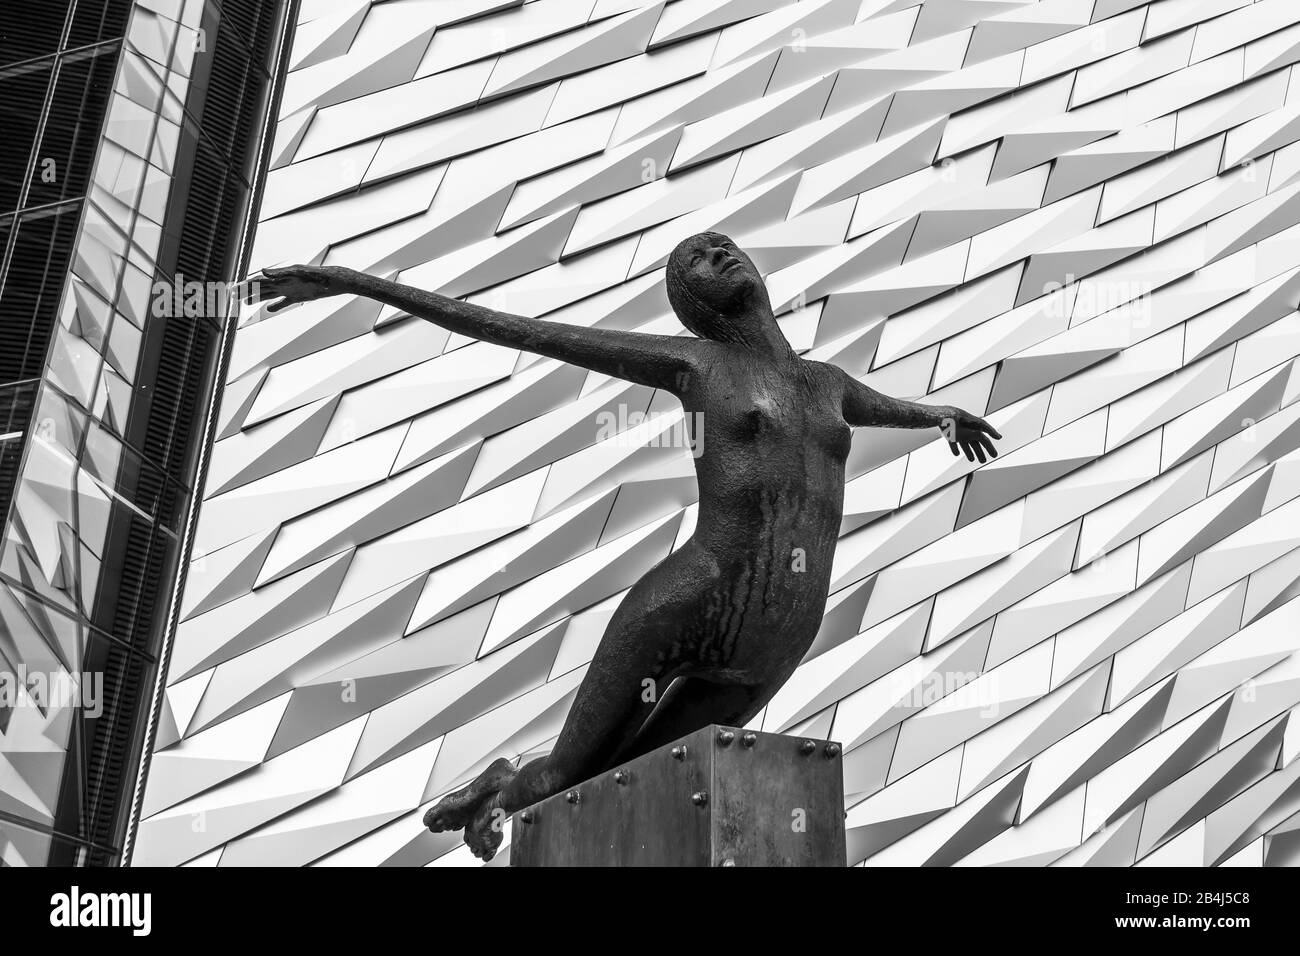 Sculpture, 'Titanica' by the renowned Irish sculptor Rowan Gillespie, Museum, Titanic, Belfast, Northern Ireland, United Kingdom, Europe Stock Photo